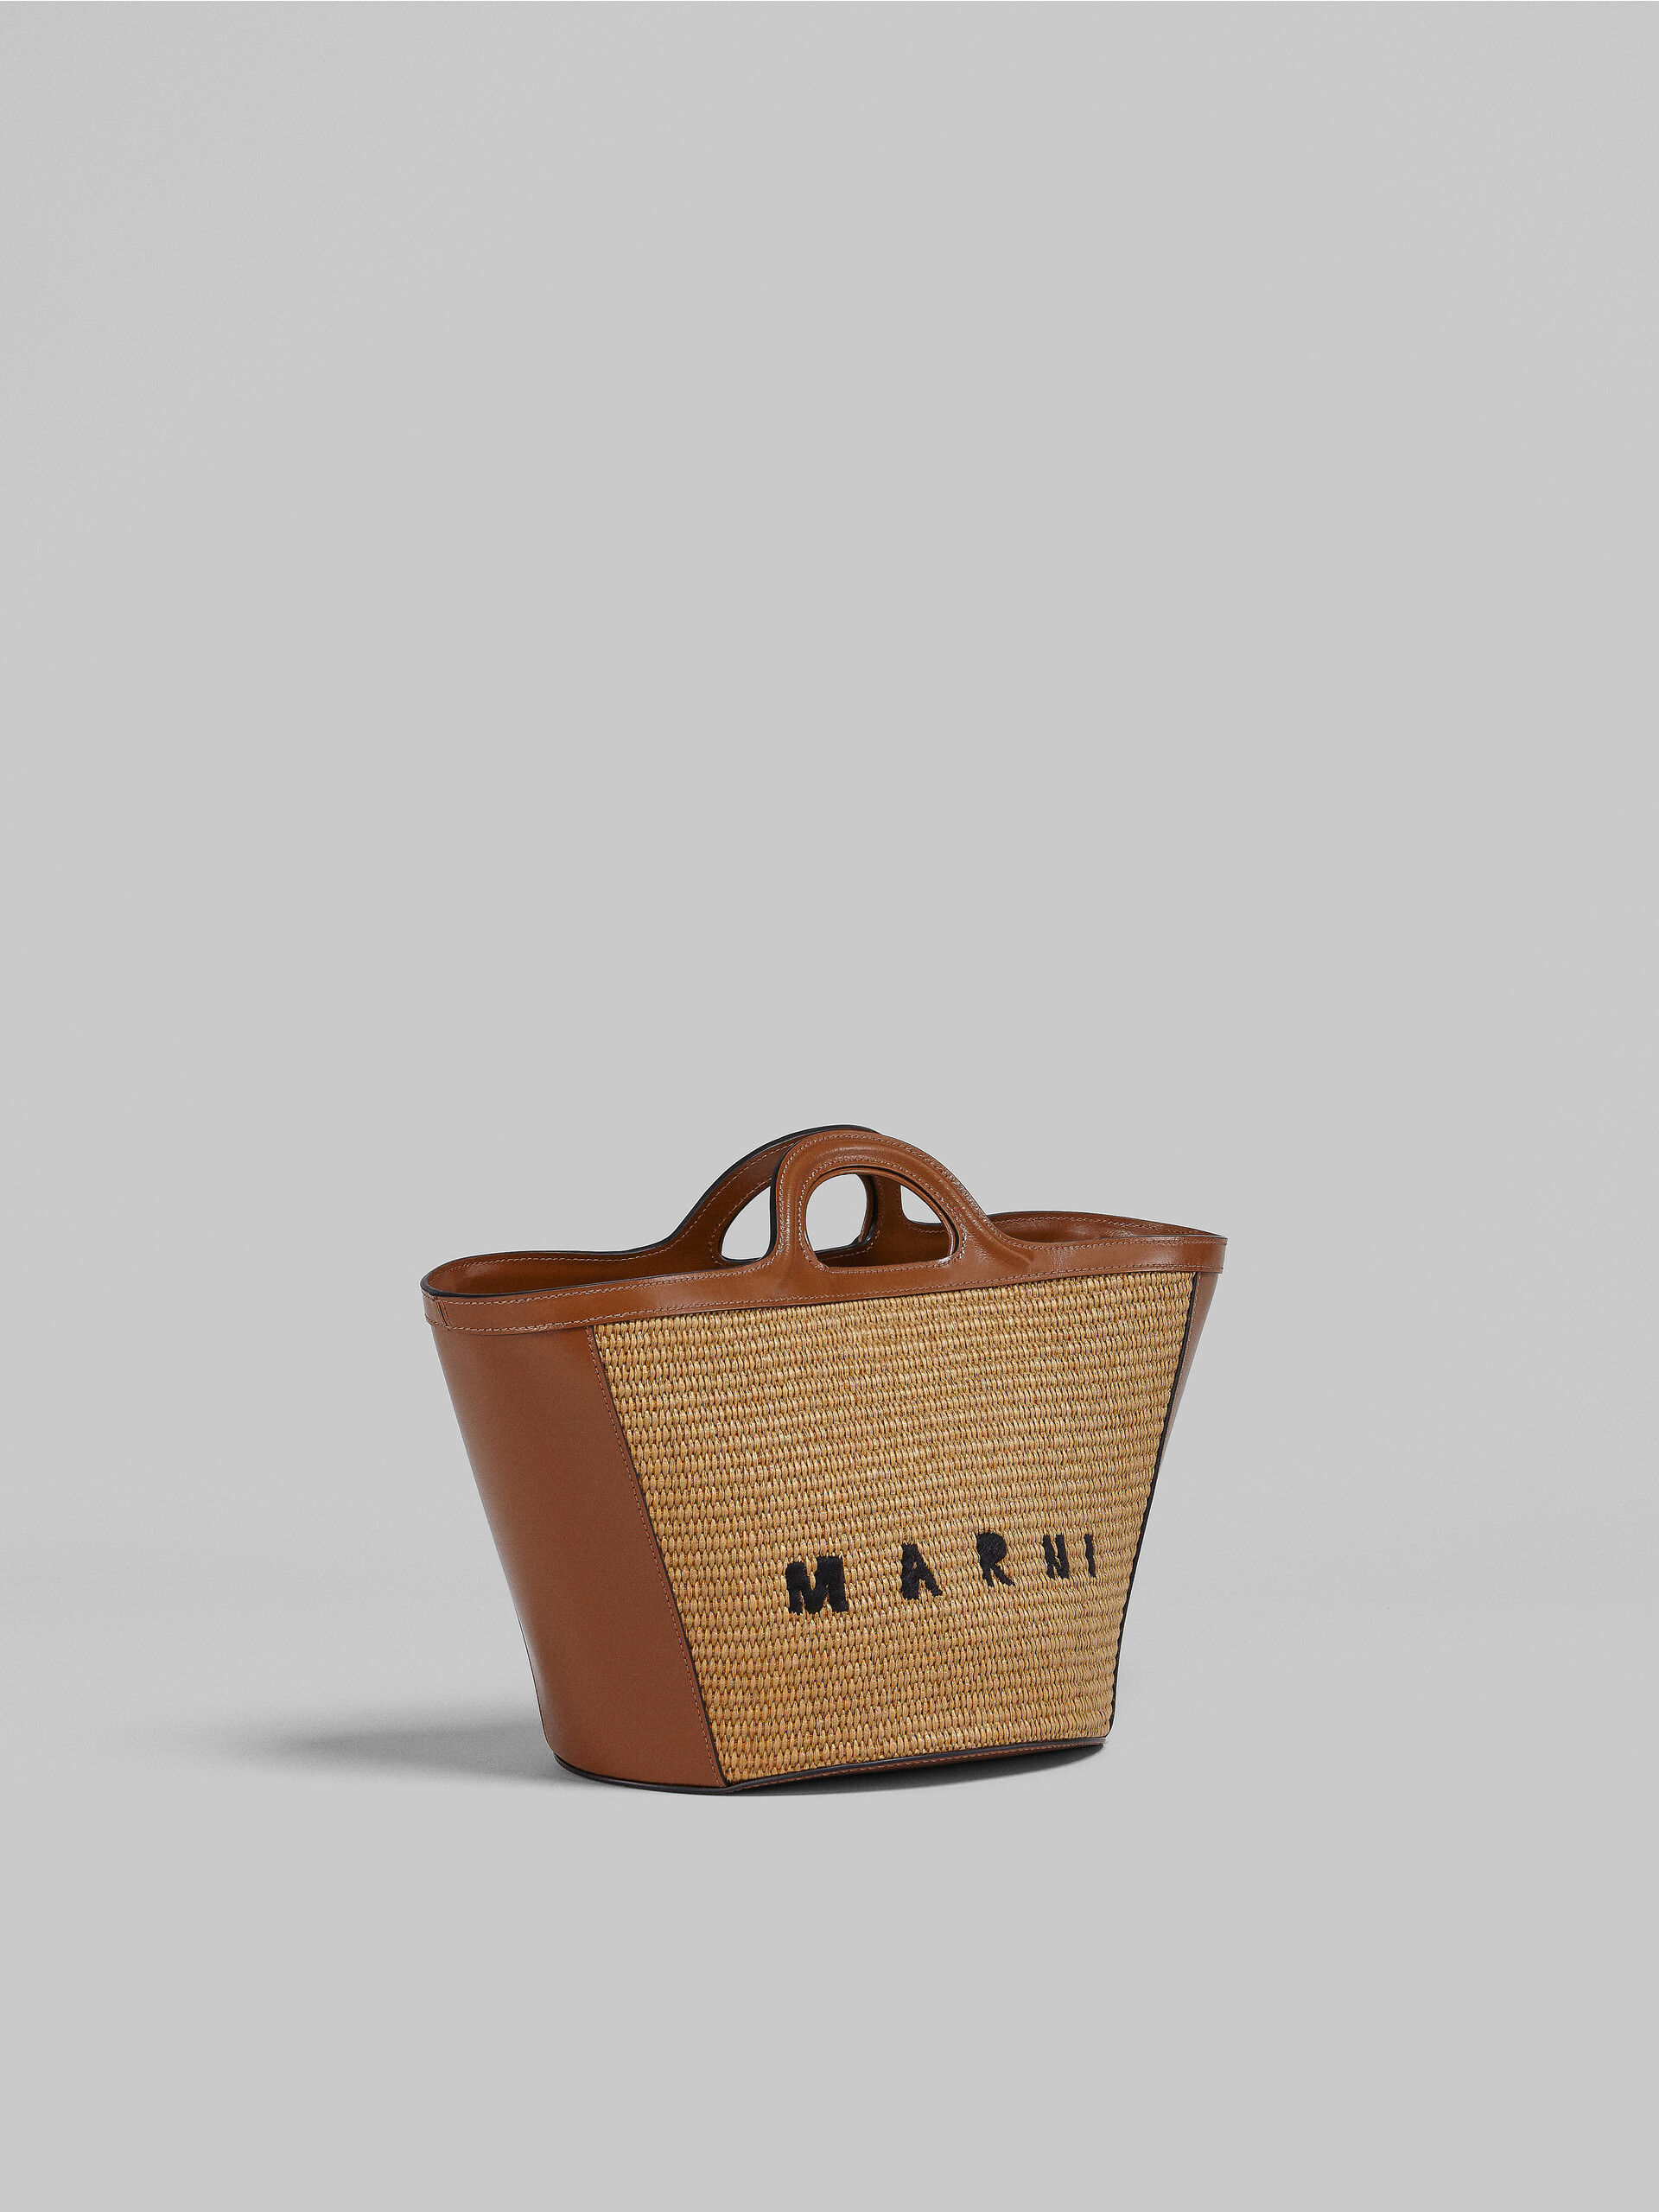 Tropicalia Small Bag in brown leather and raffia-effect fabric - Handbag - Image 6